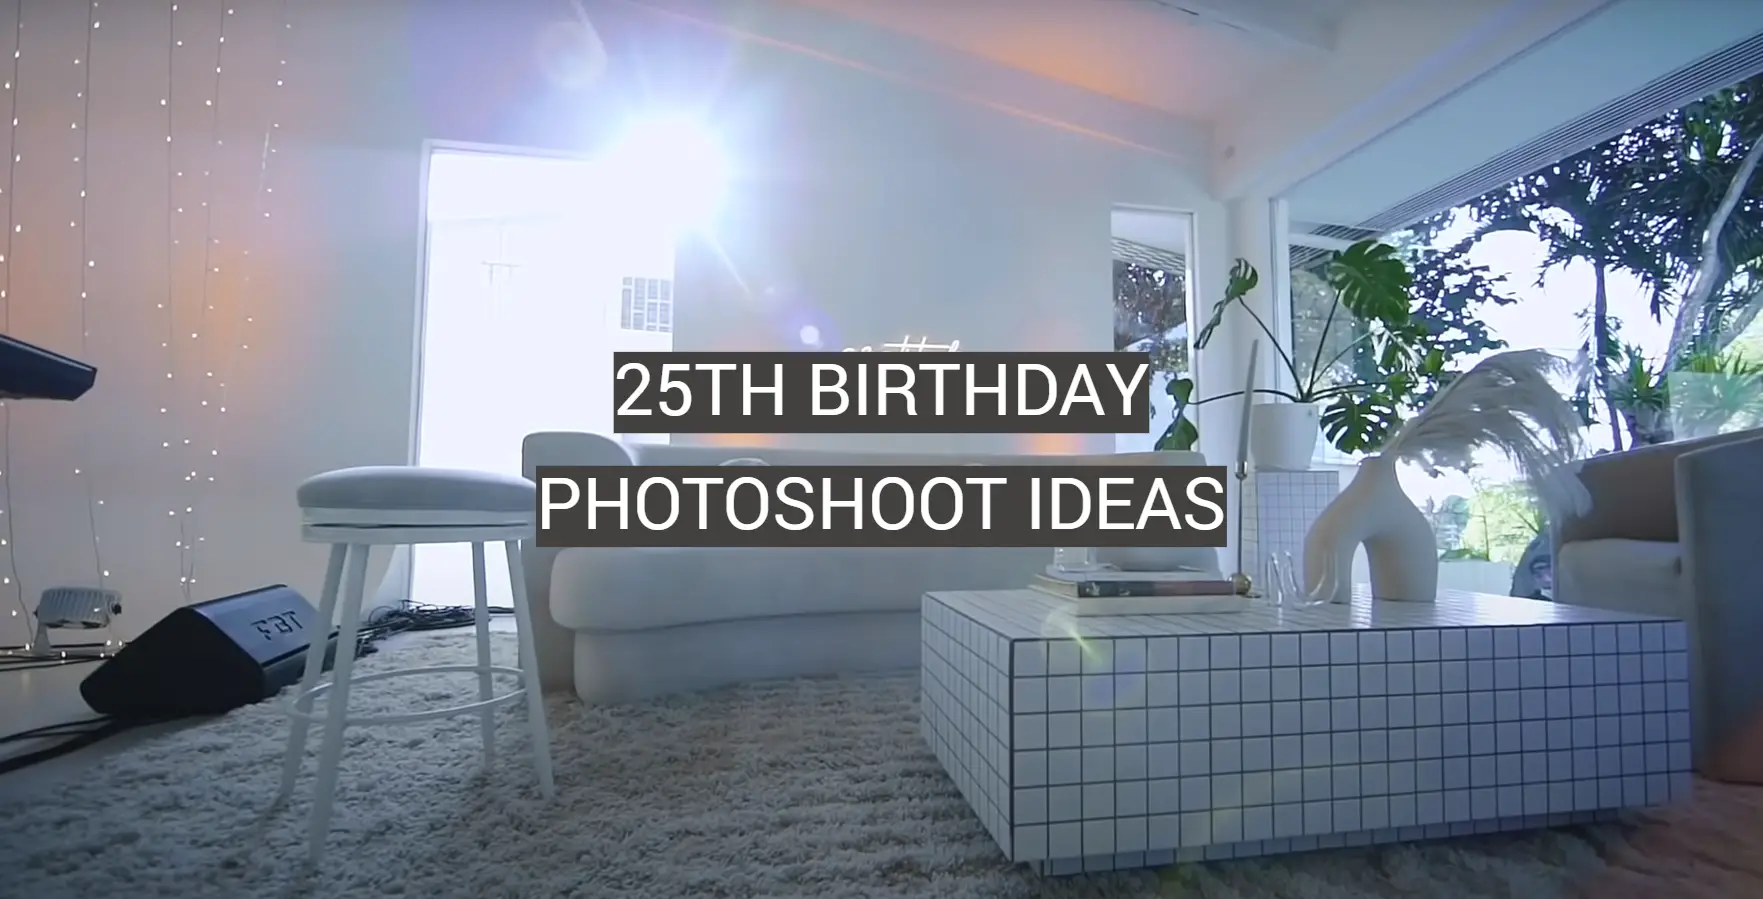 25th Birthday Photoshoot Ideas